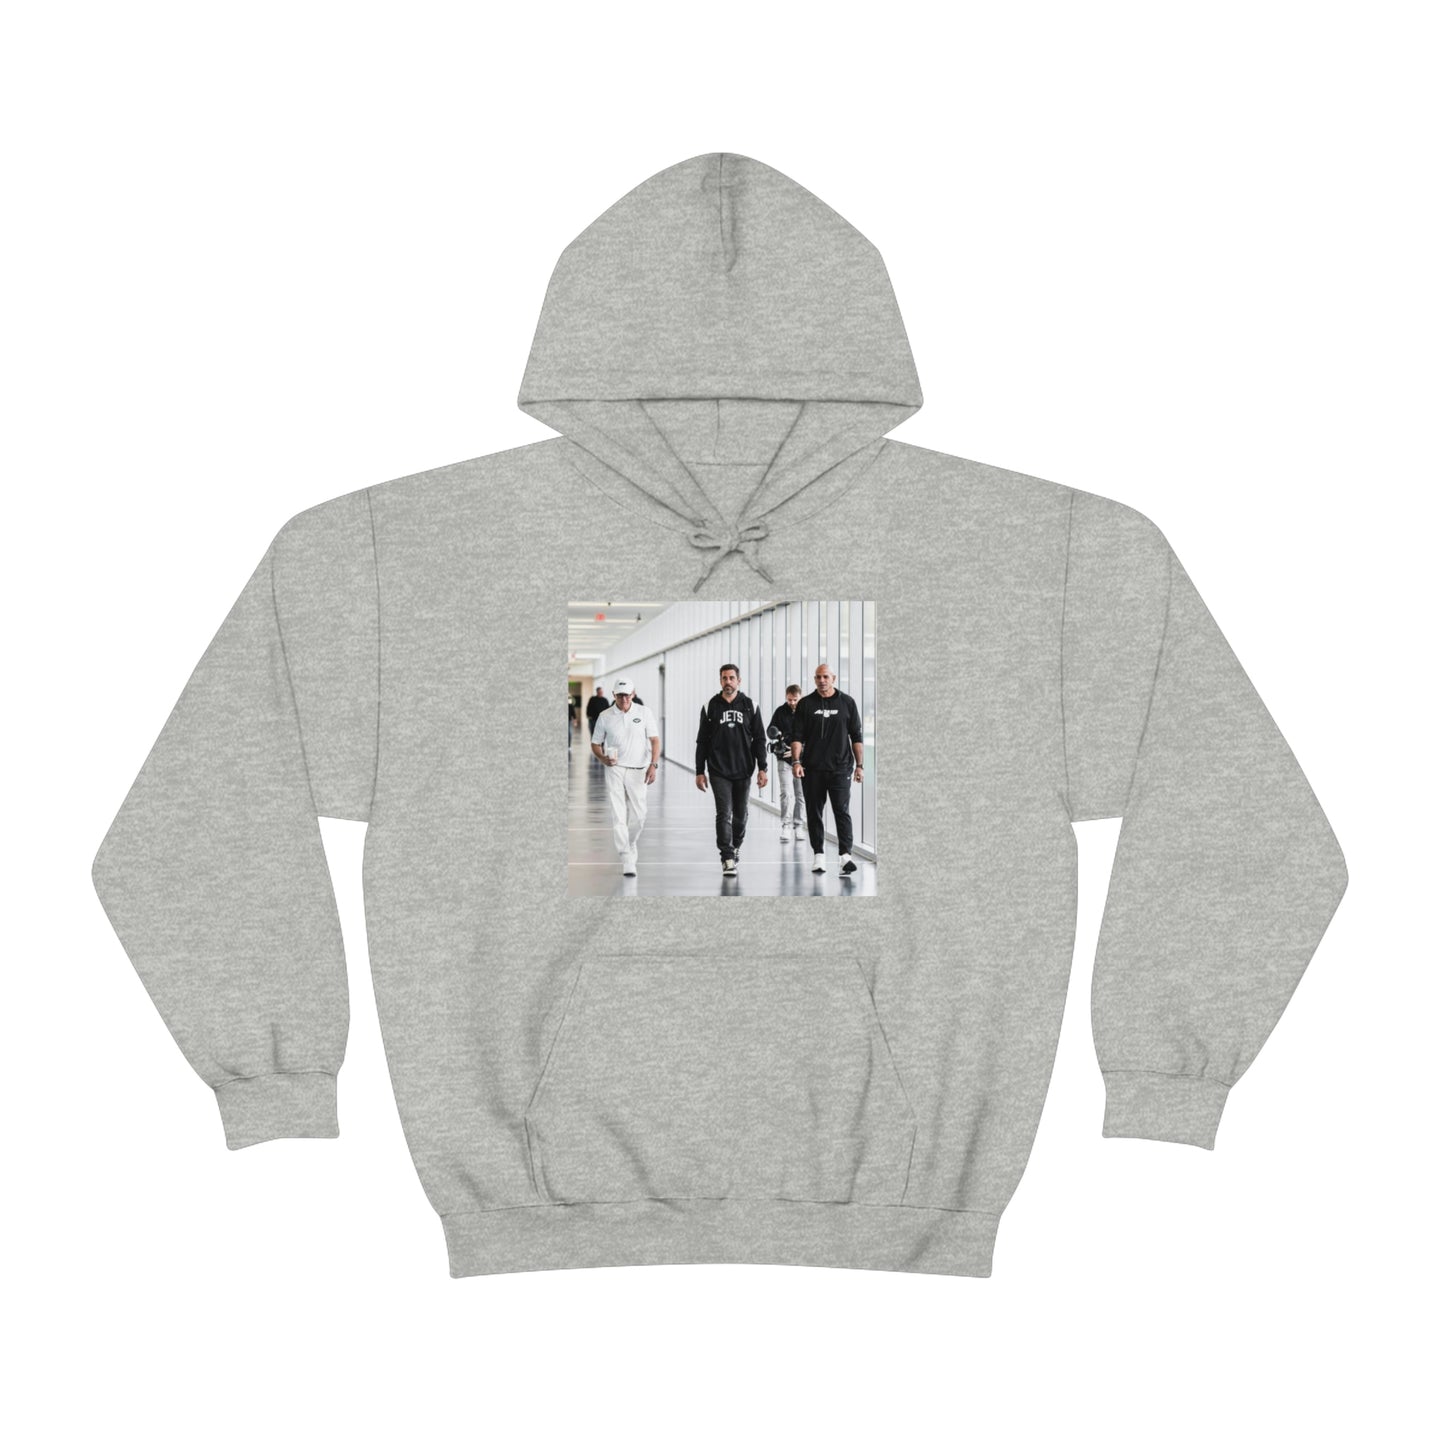 Aaron Rodgers Walking with Saleh and Woody Johnson Shirt  Hooded Sweatshirt